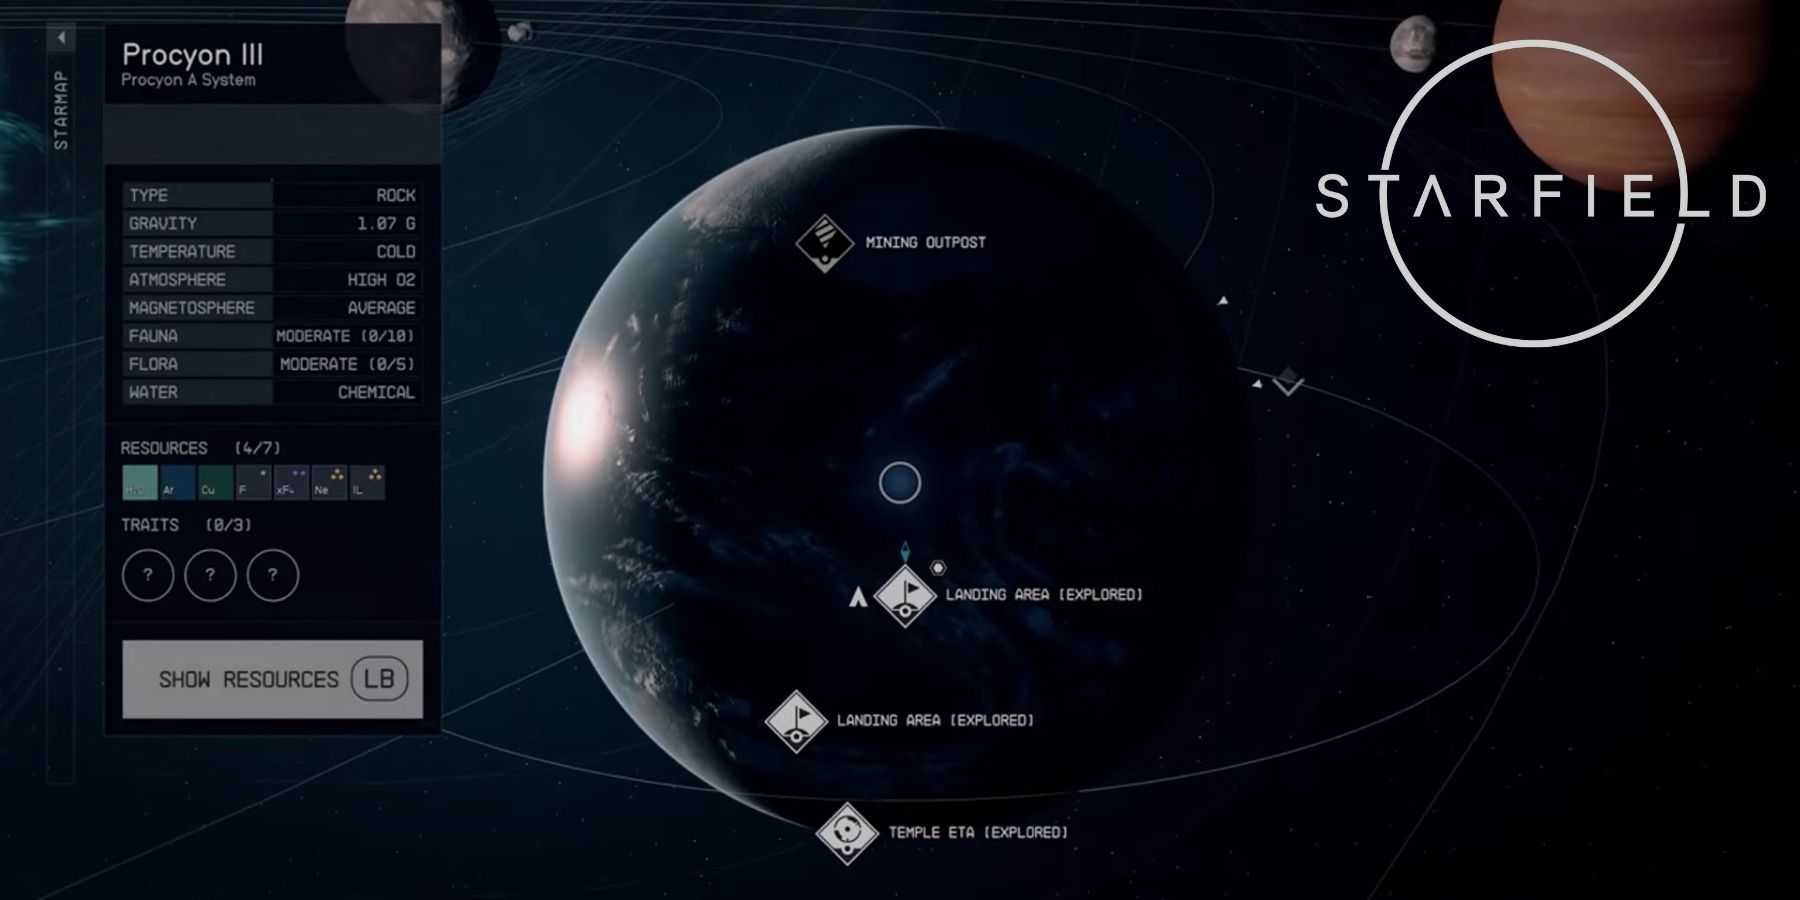 Earth Vs Charon: The Ultimate Celestial Showdown